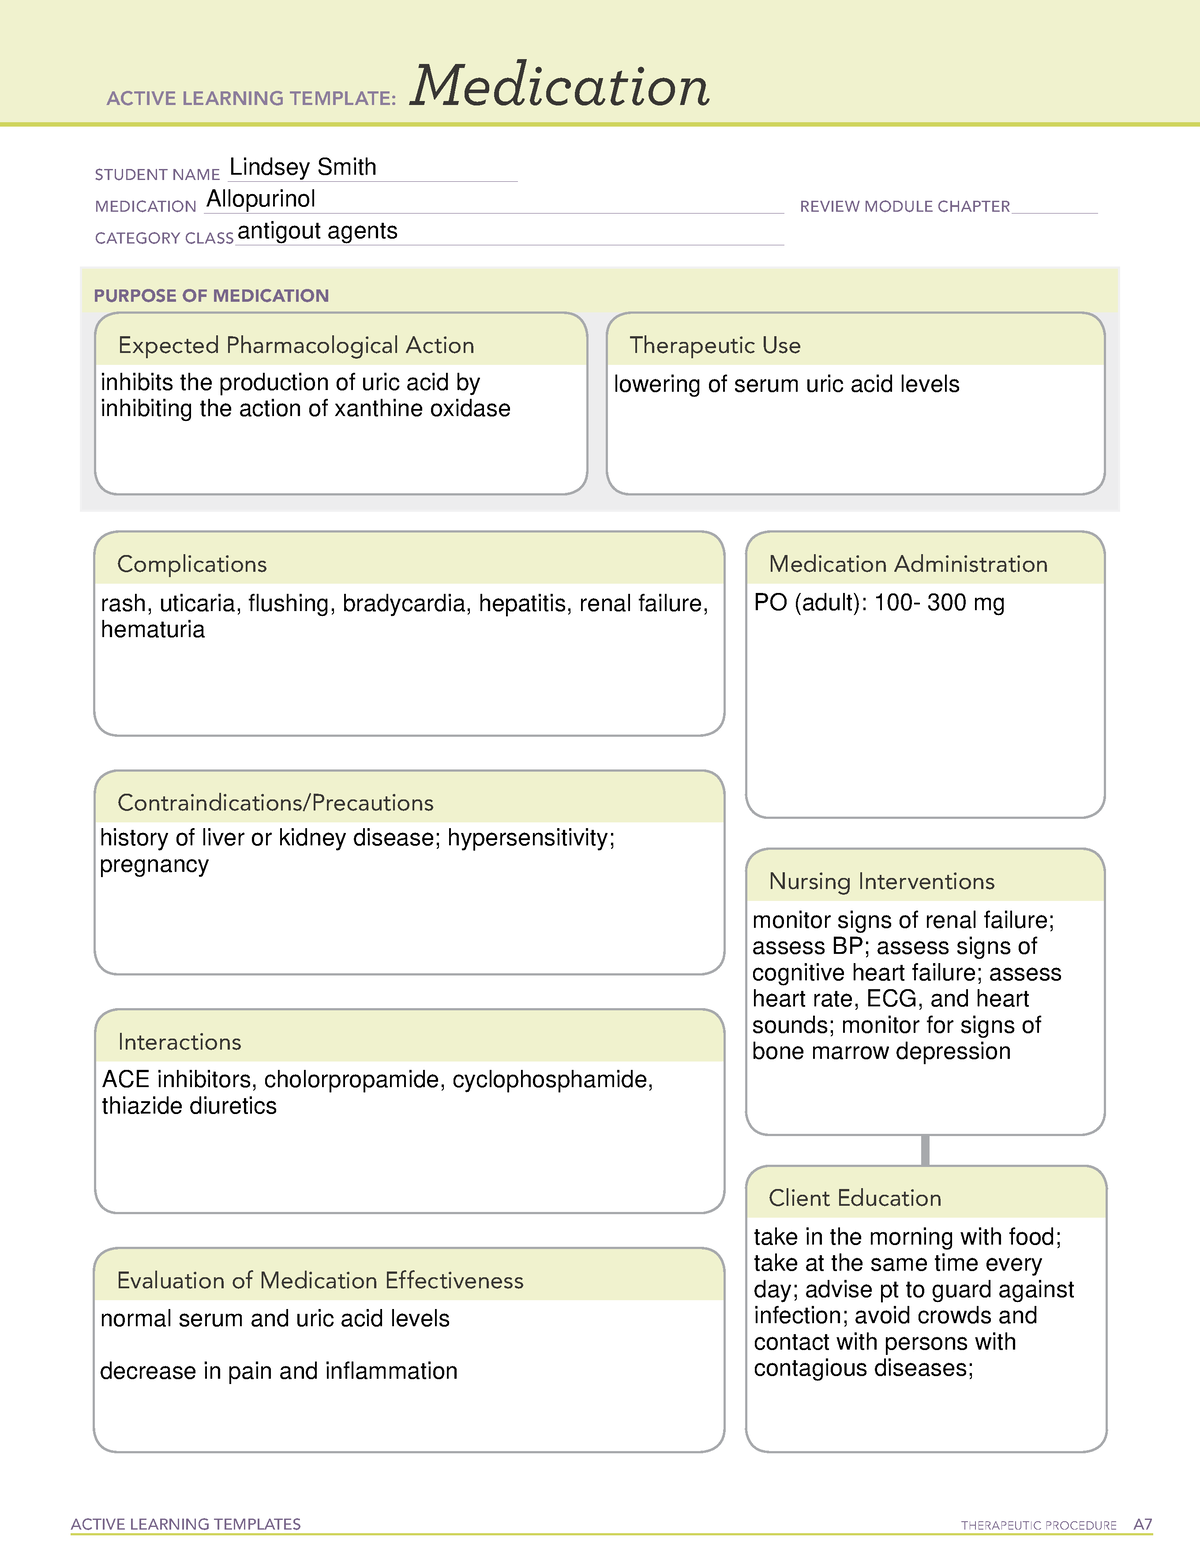 ati-allopurinol-medication-template-active-learning-templates